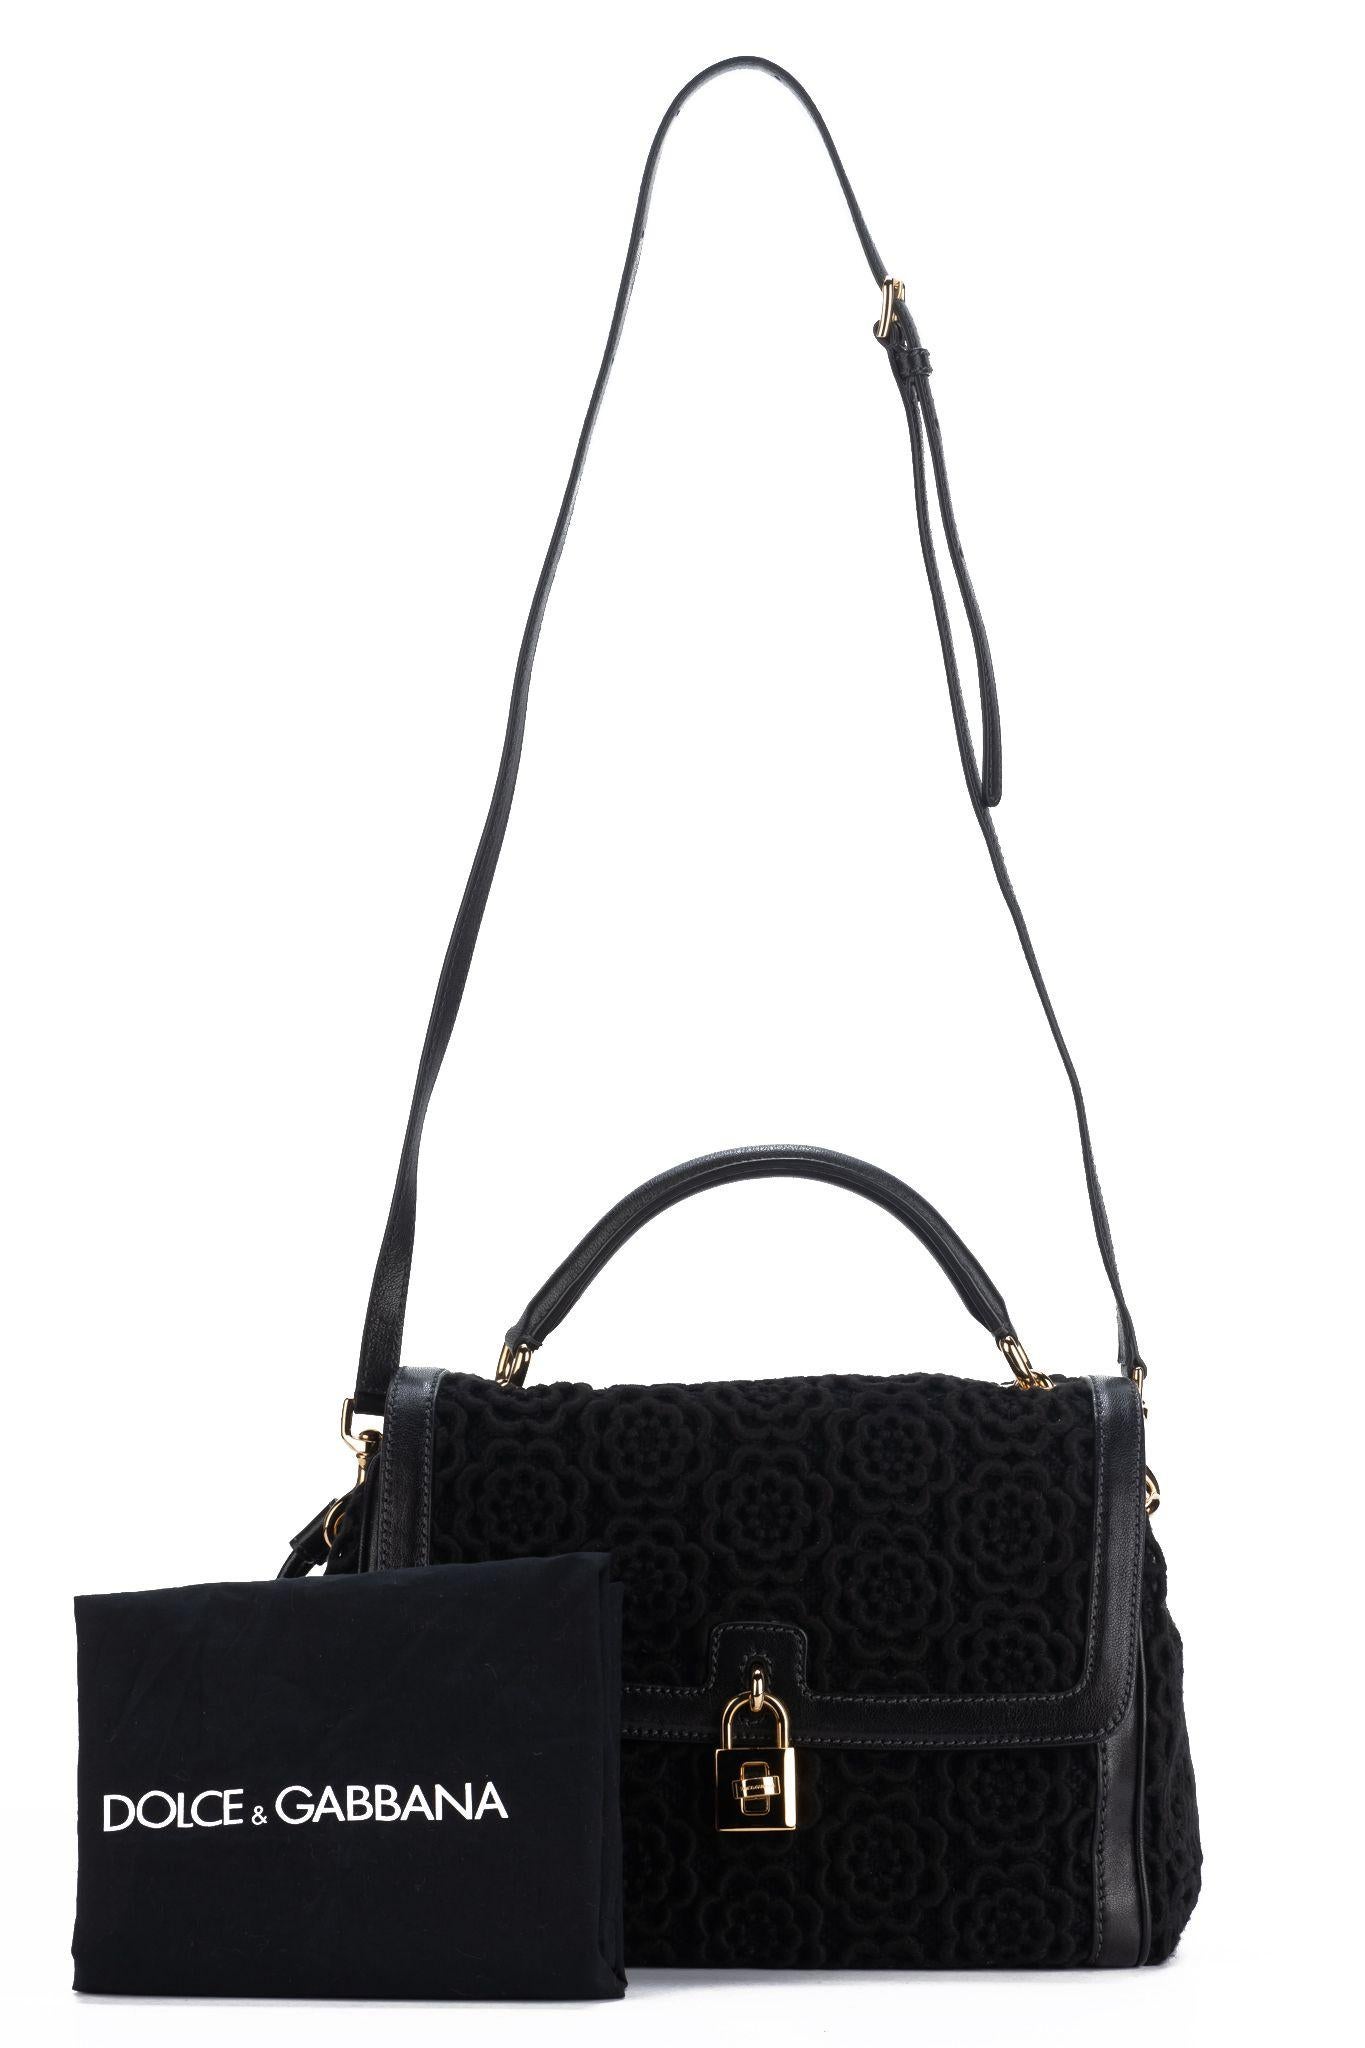 Dolce & Gabbana New Black Macrame Bag For Sale 9